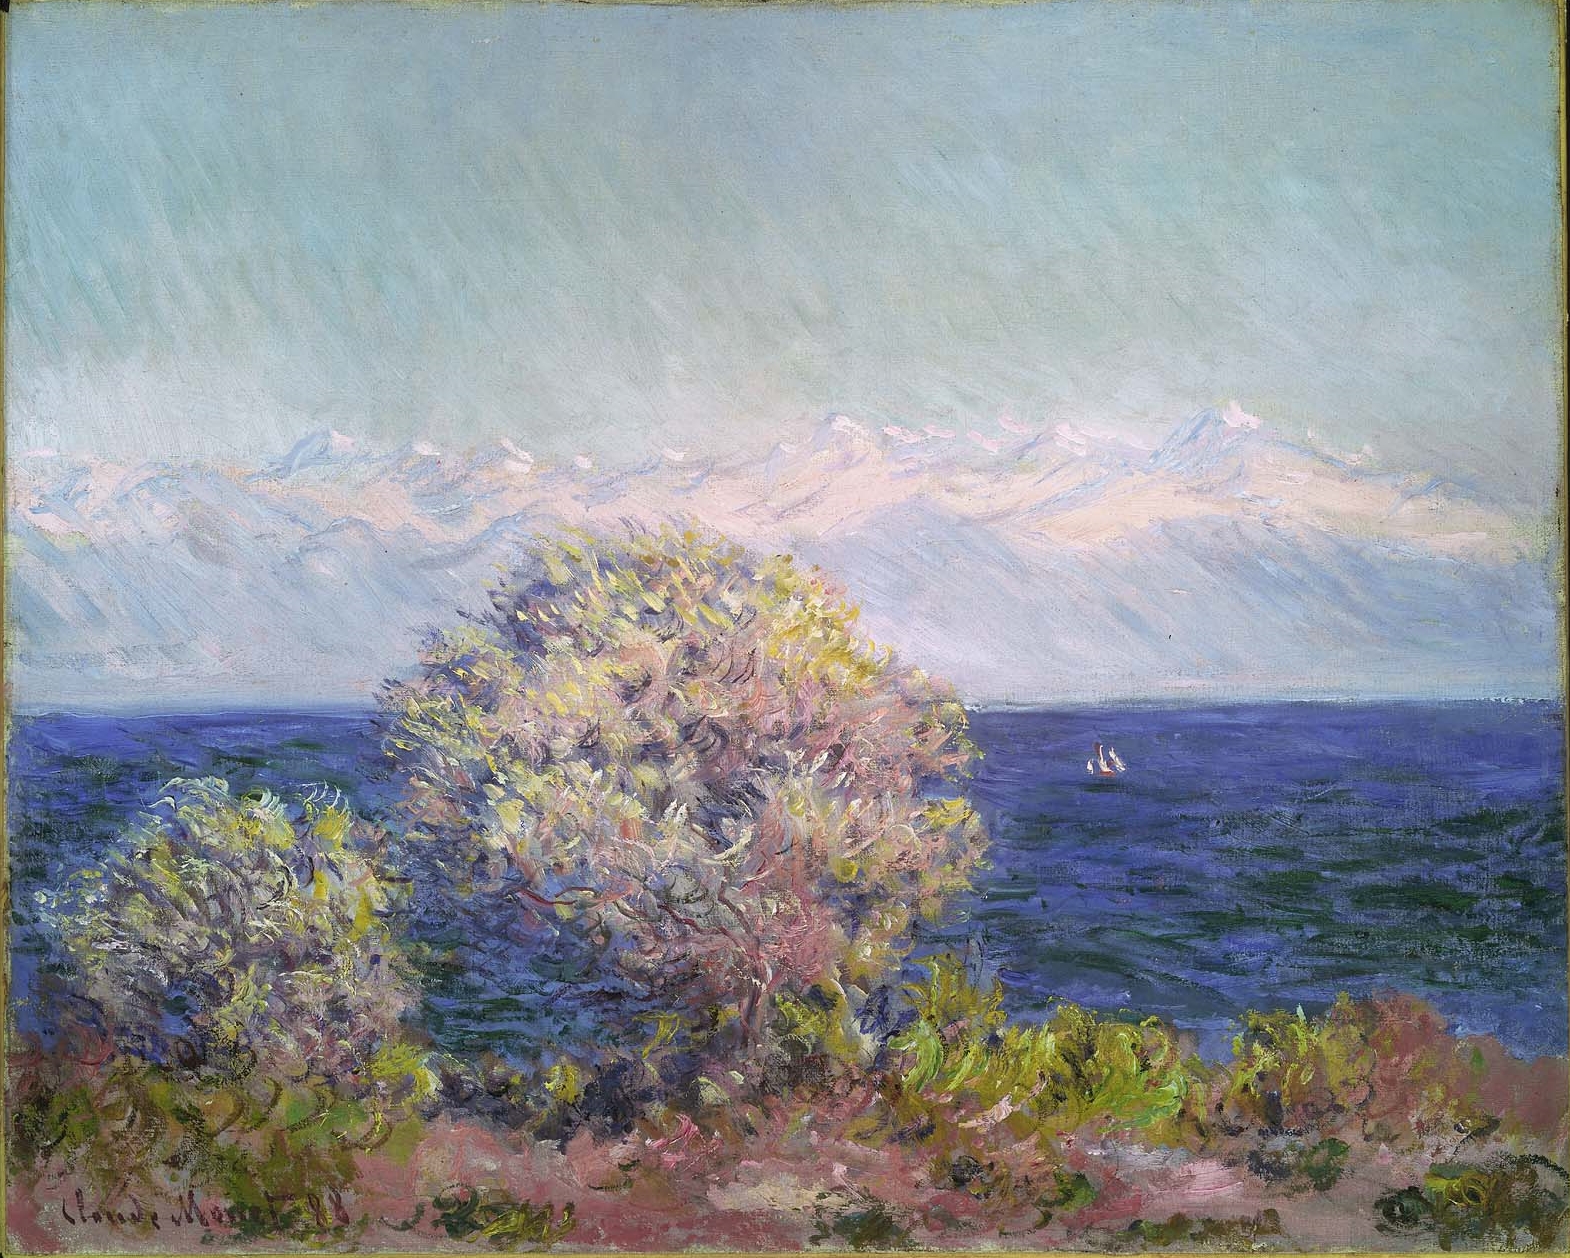 Claude+Monet-1840-1926 (854).jpg